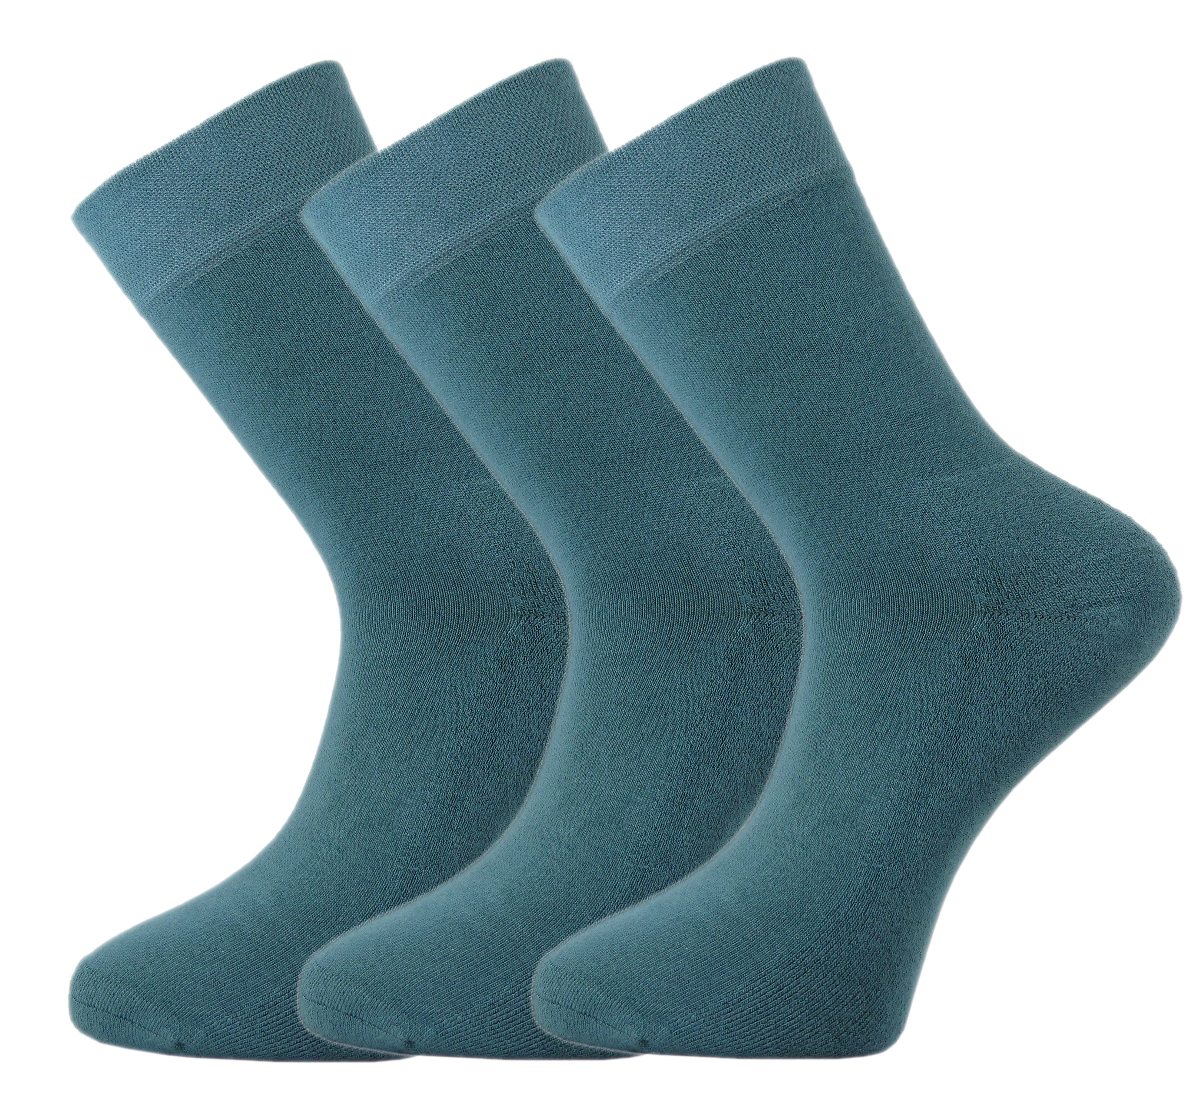 Green Unisex Breathable Mesh Cotton Sock Supplier